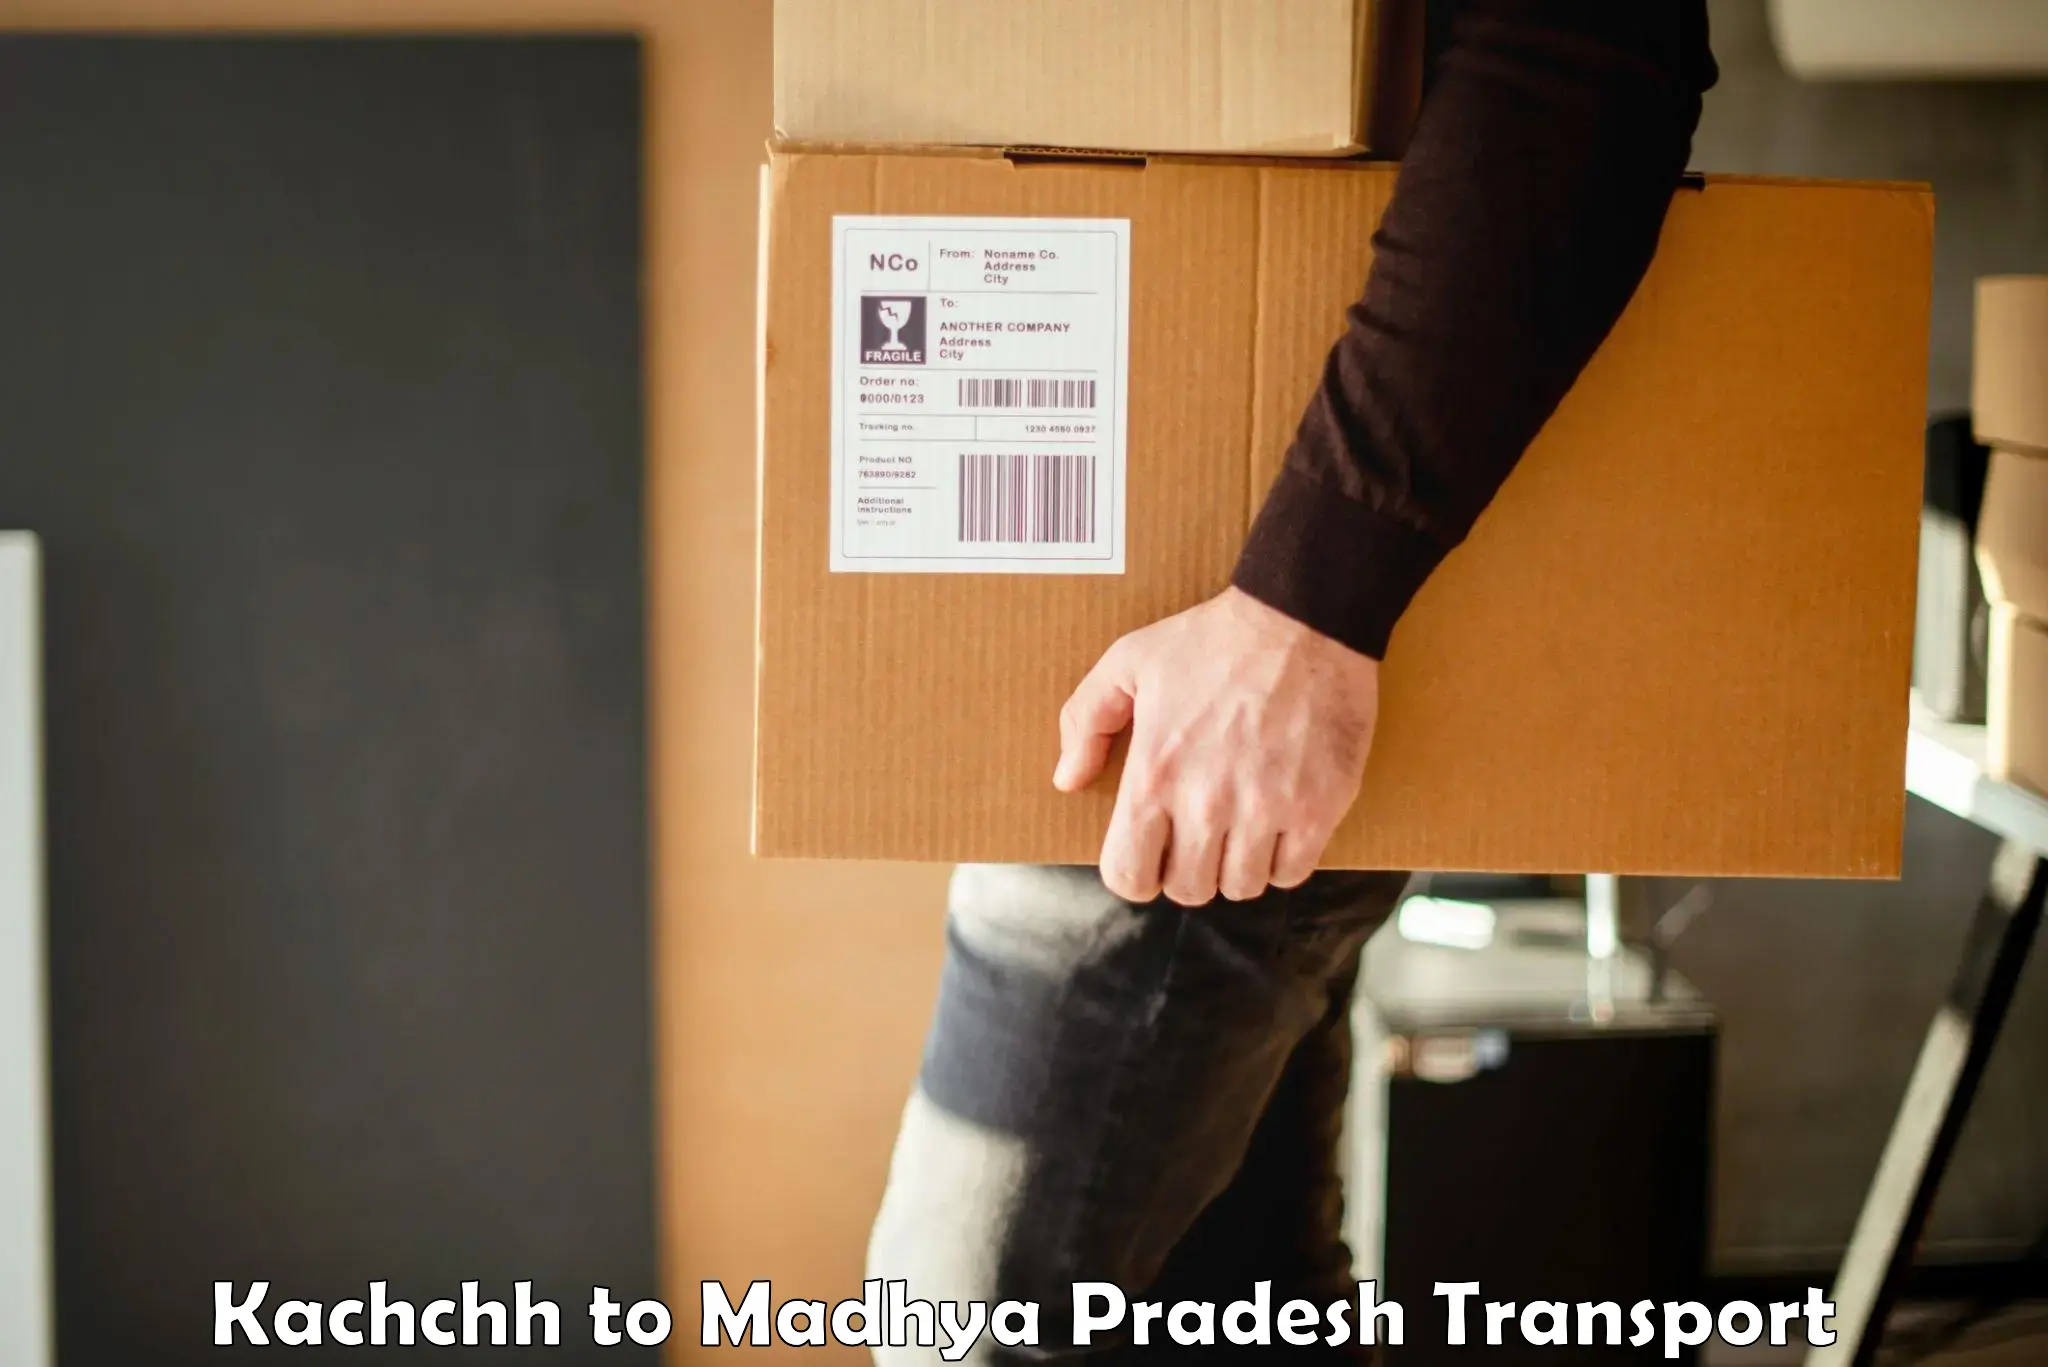 Truck transport companies in India Kachchh to Mandideep